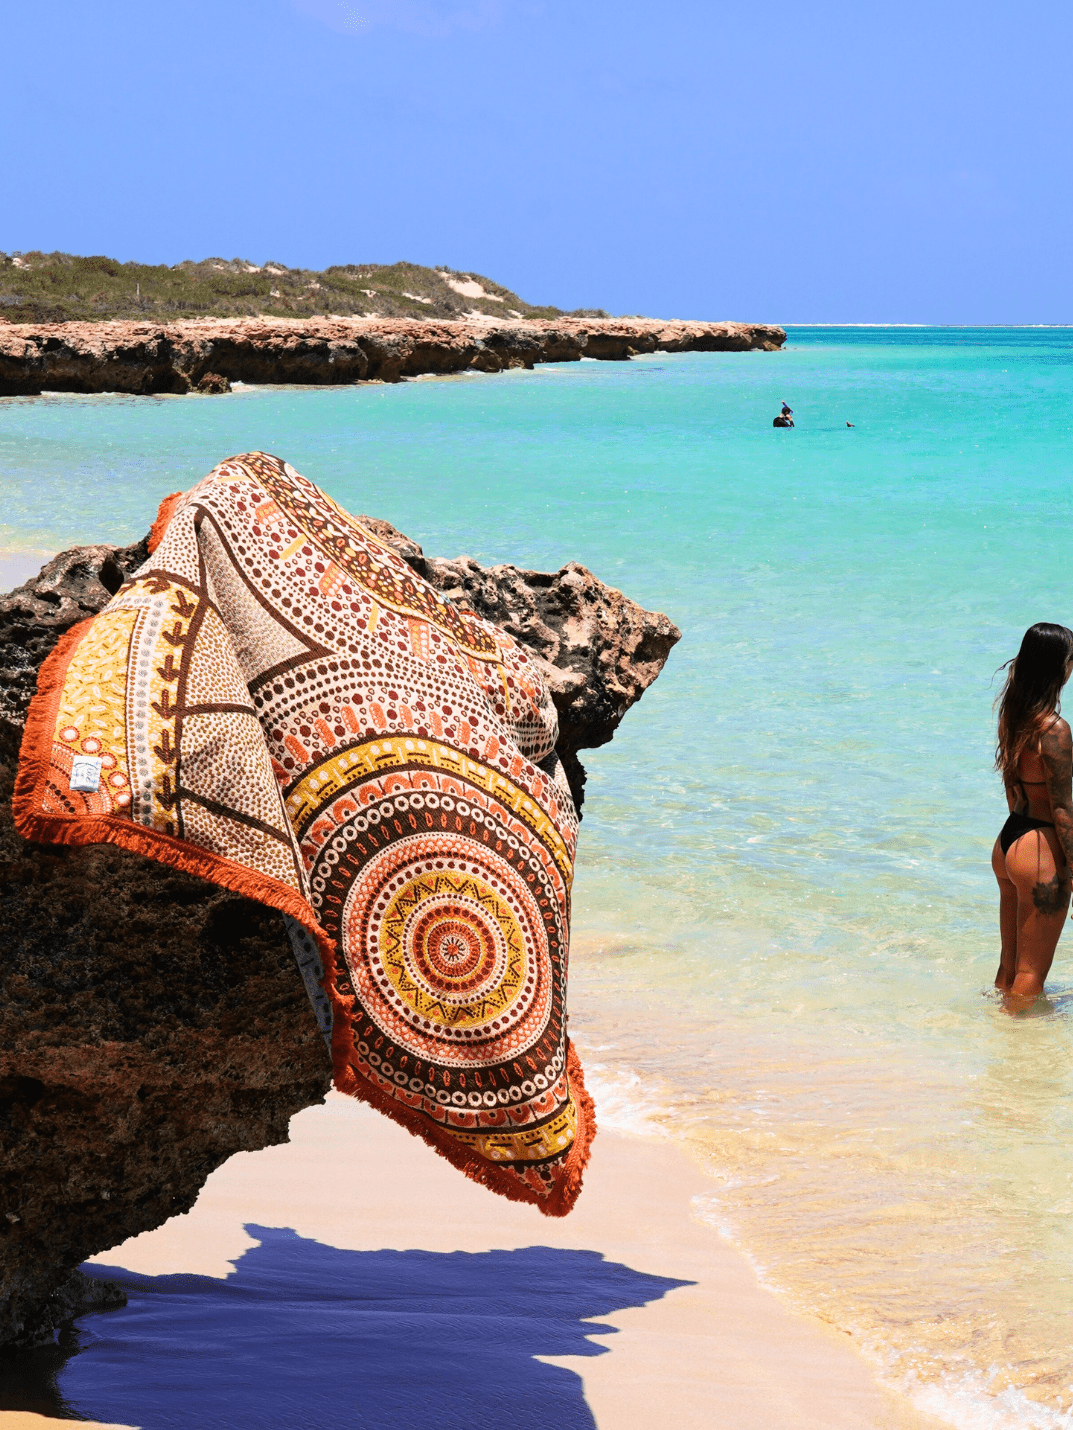 Stomping Ground throw rug design, Indigenous Aboriginal art beach blanket in orange and brown tones hanging over rocks on the beach, crystal blue ocean in background. Western Australia